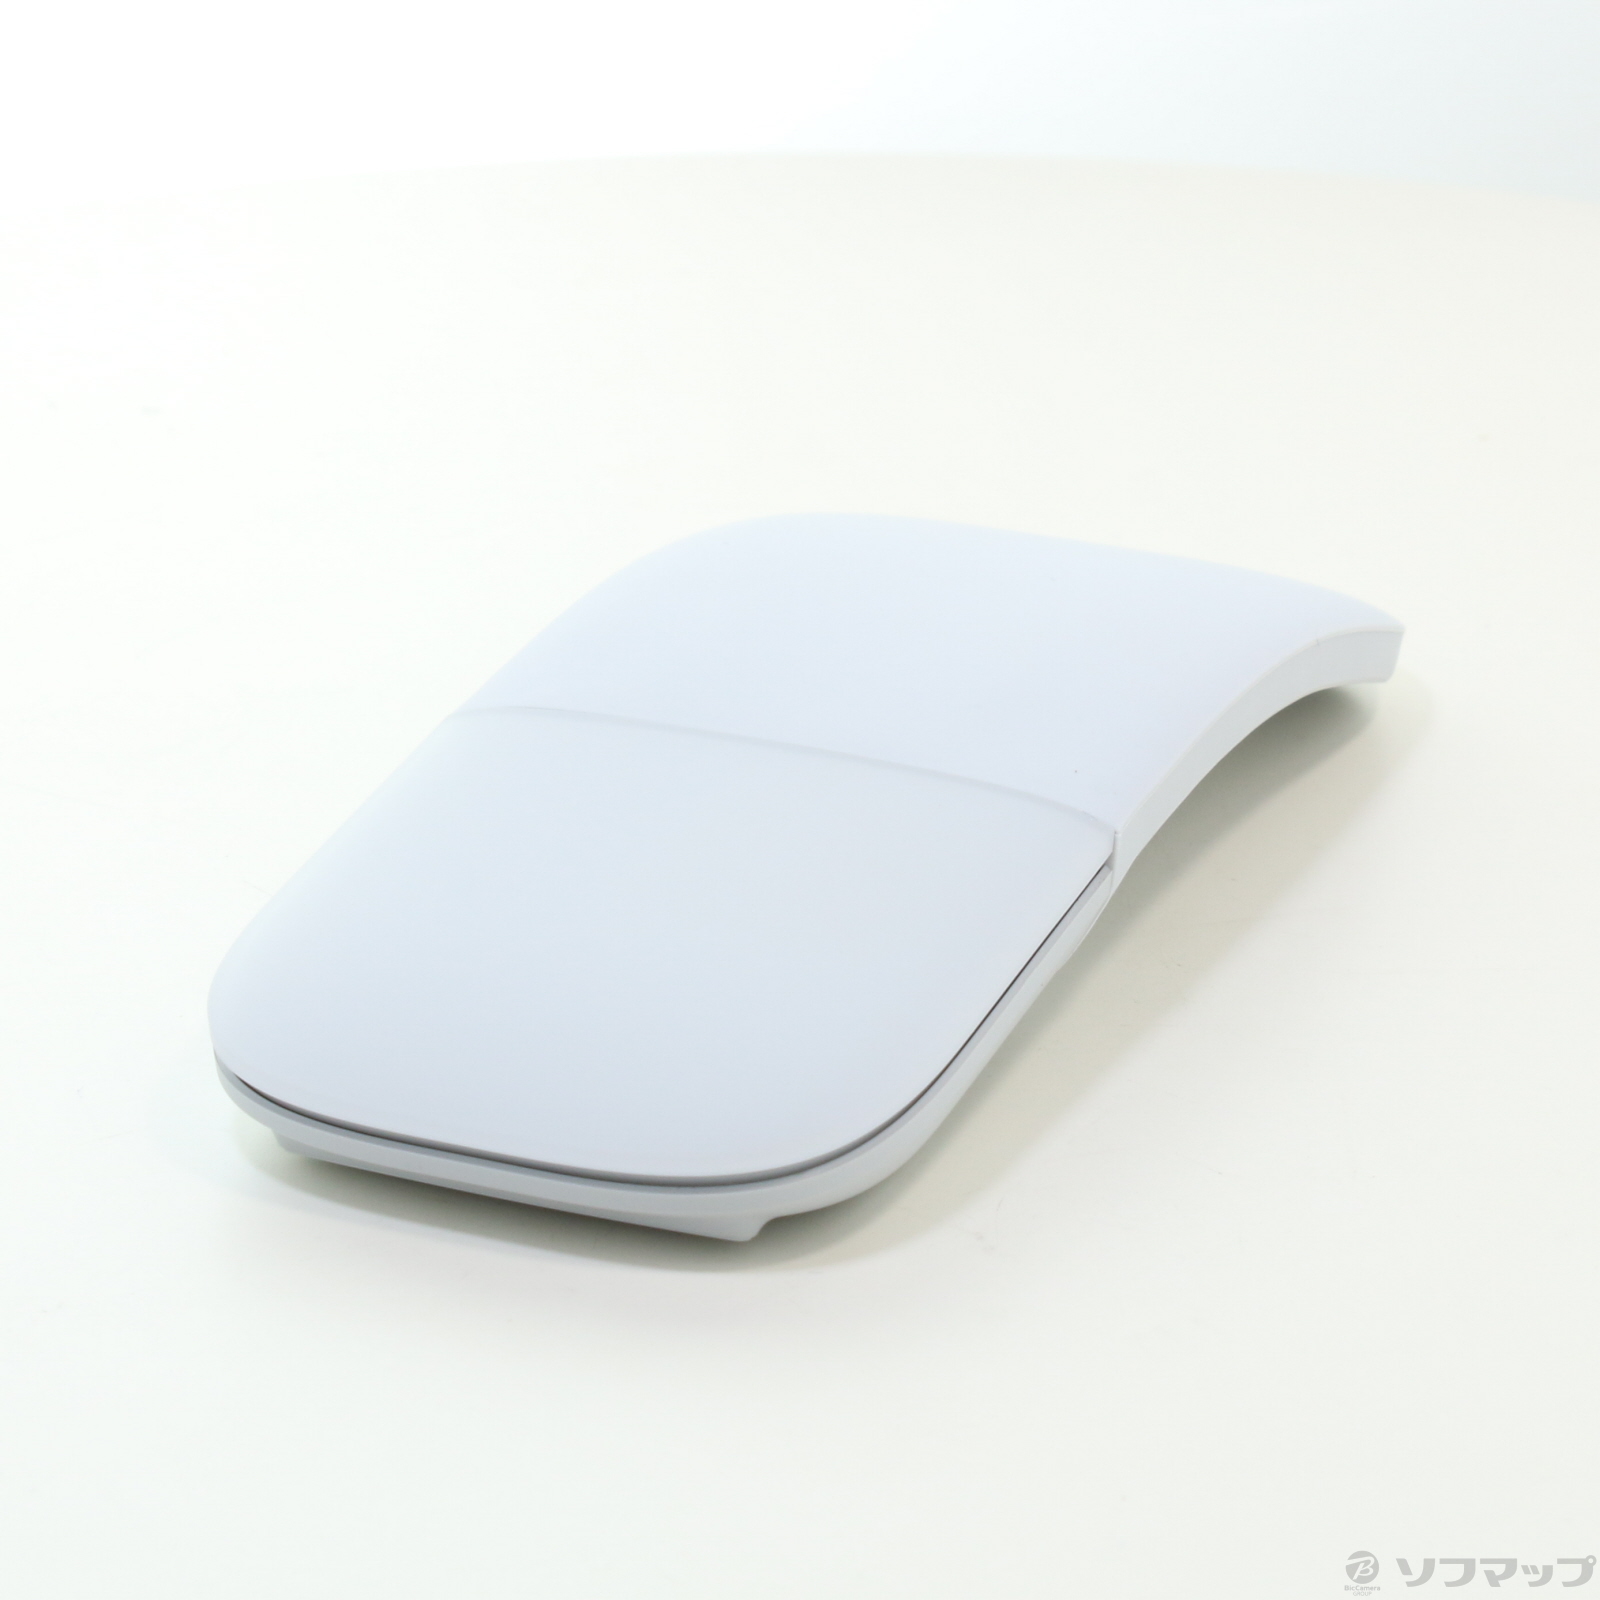 Surface Arc Mouse CZV-00007 グレー